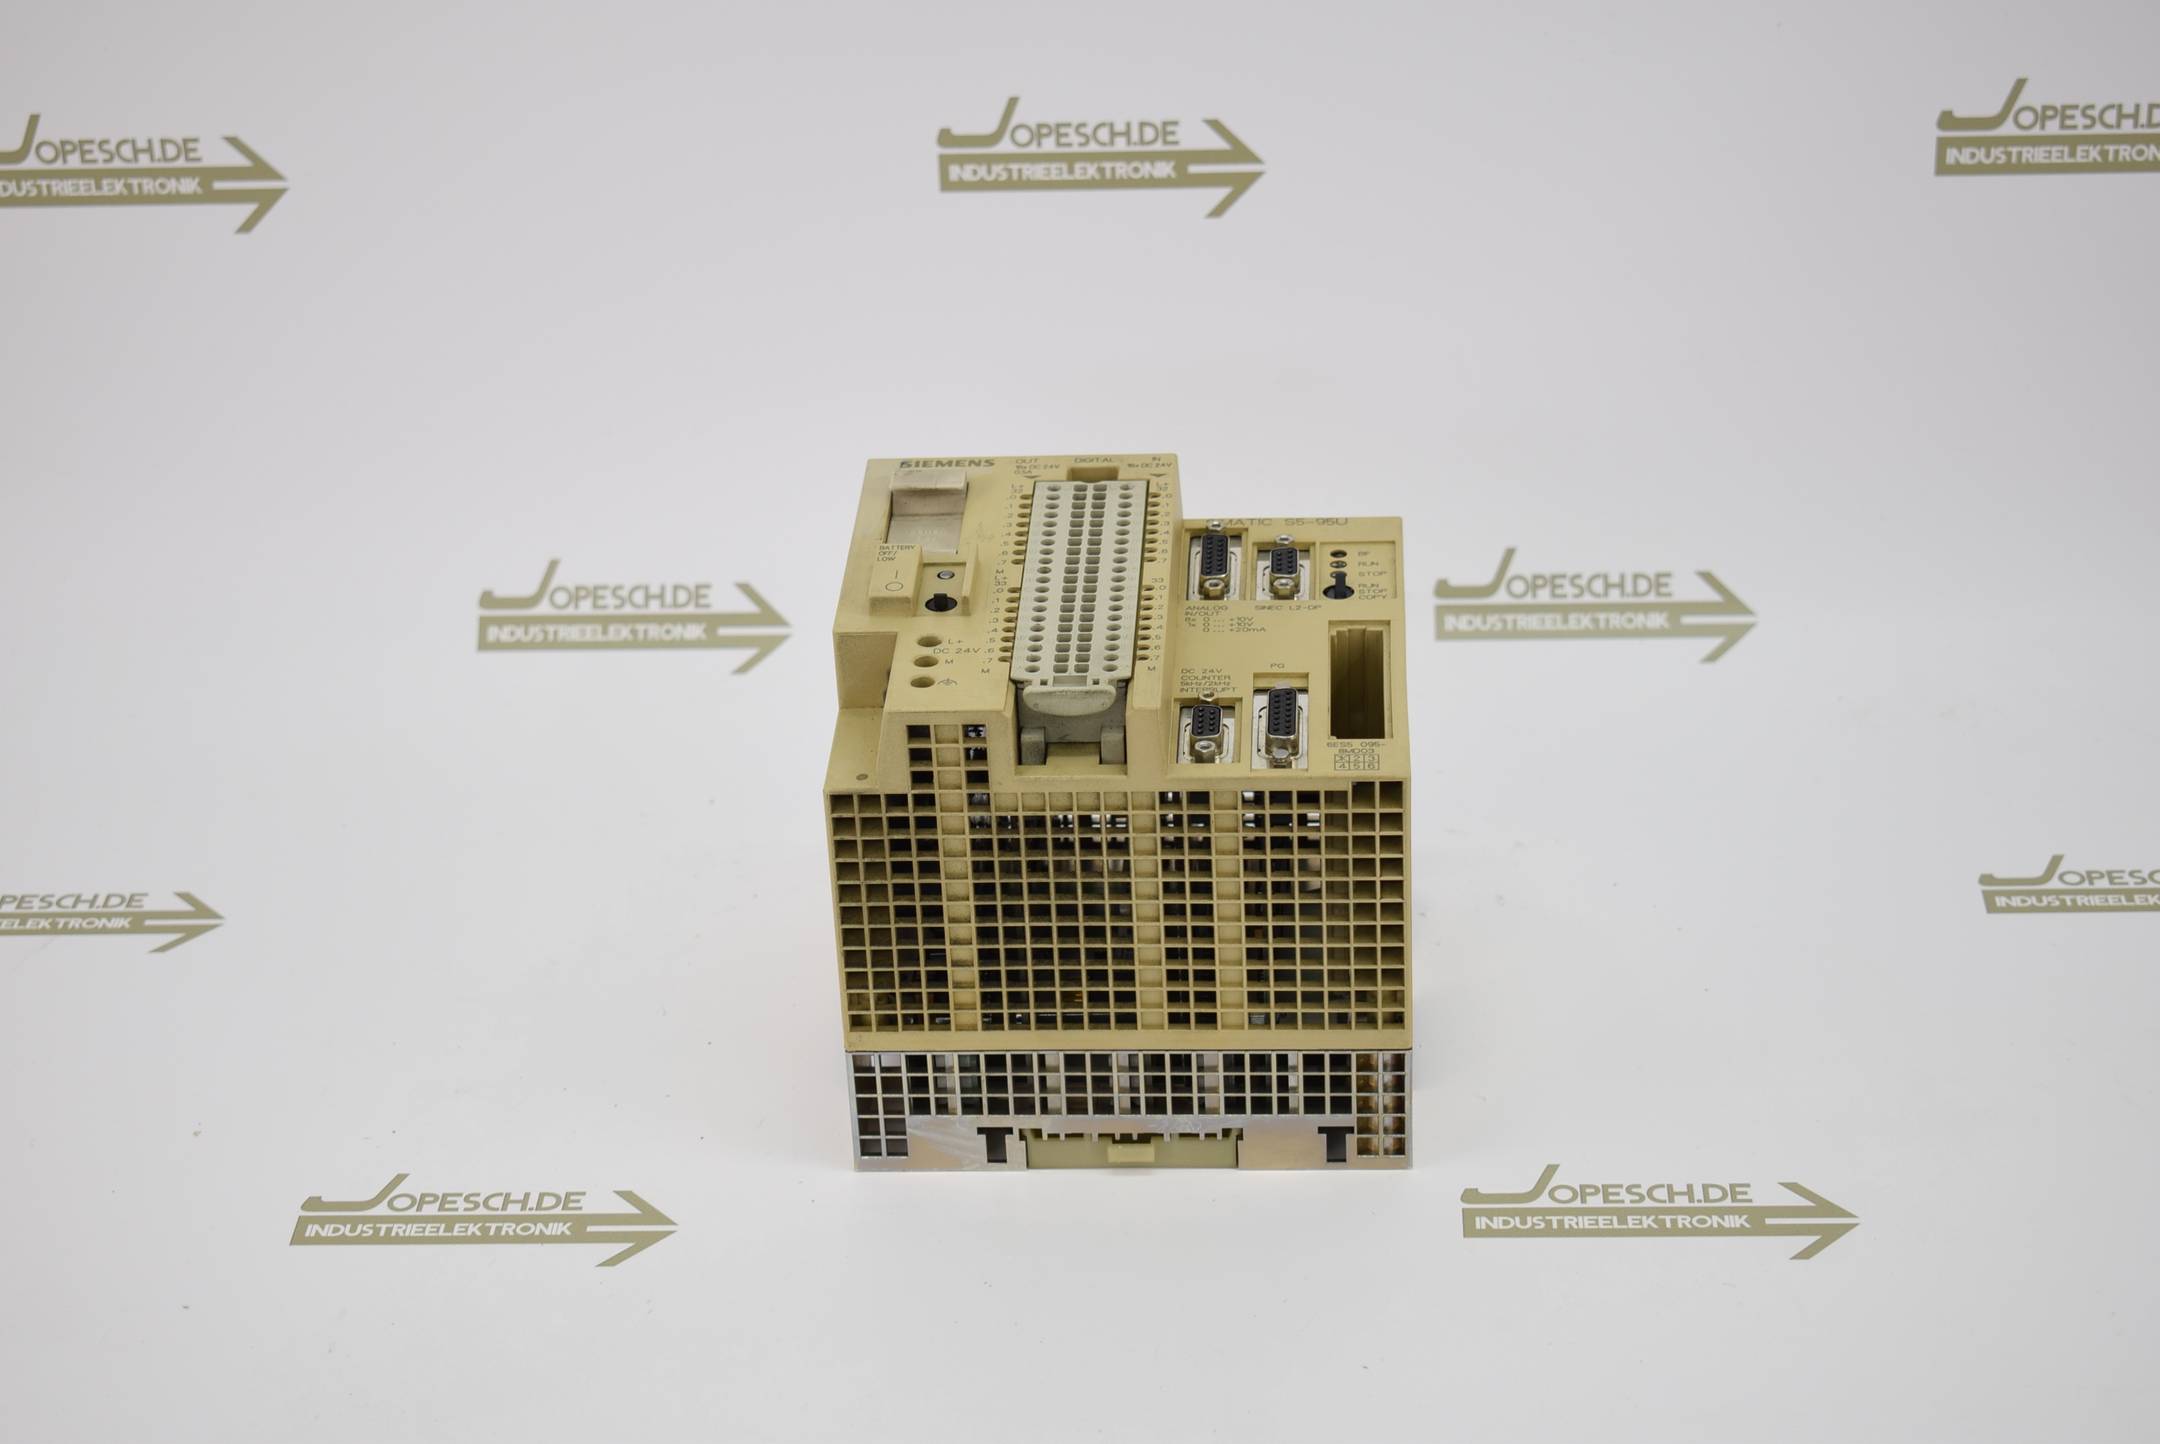 Siemens simatic S5 Kompaktgerät S5-95U 6ES5 095-8MD03 ( 6ES5095-8MD03 ) E1